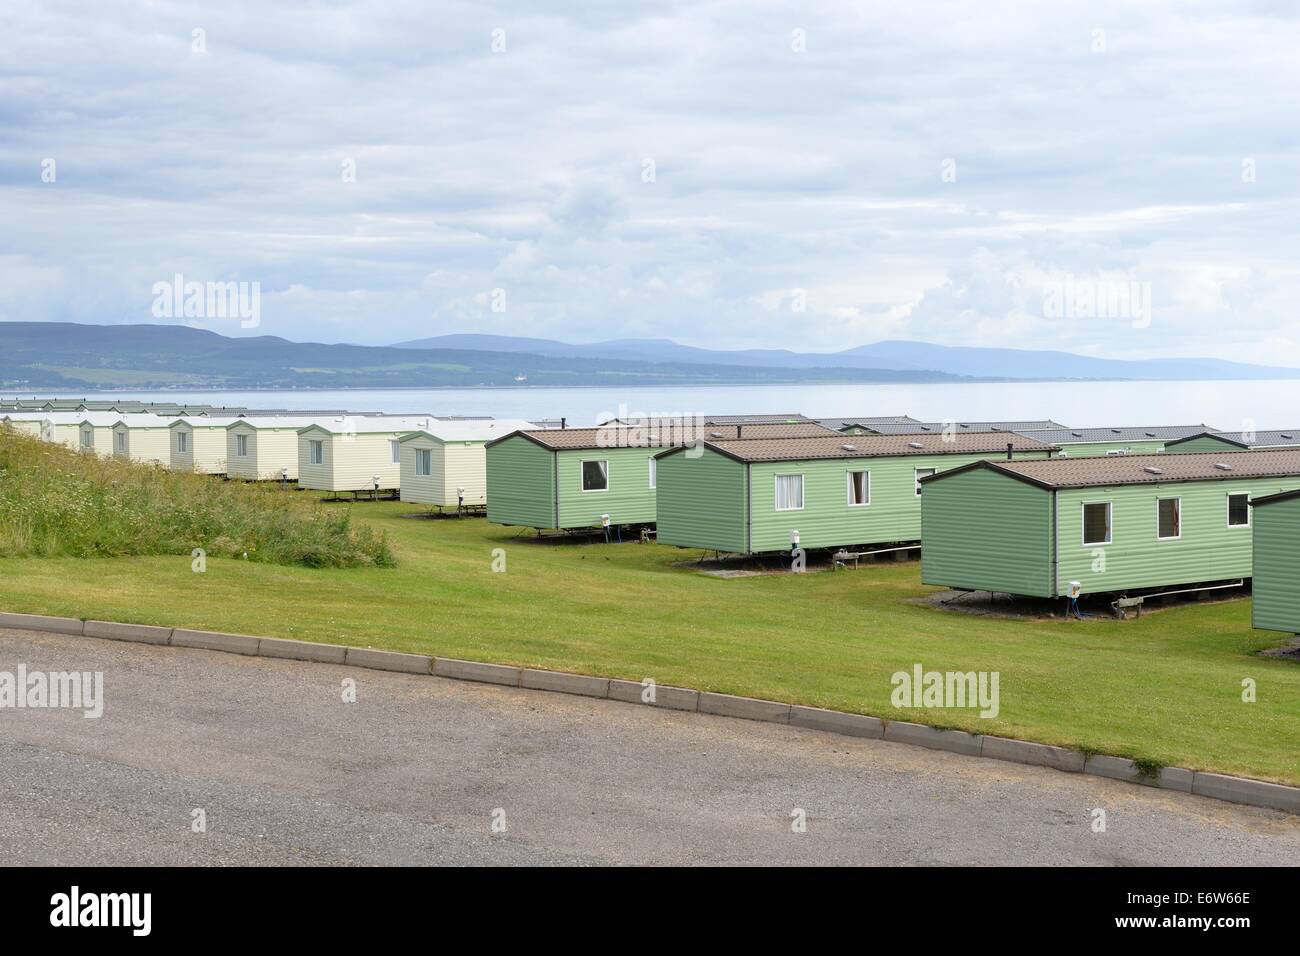 Caravans in a row in Grannies Heilan Hame, Embo, Scotland Stock Photo